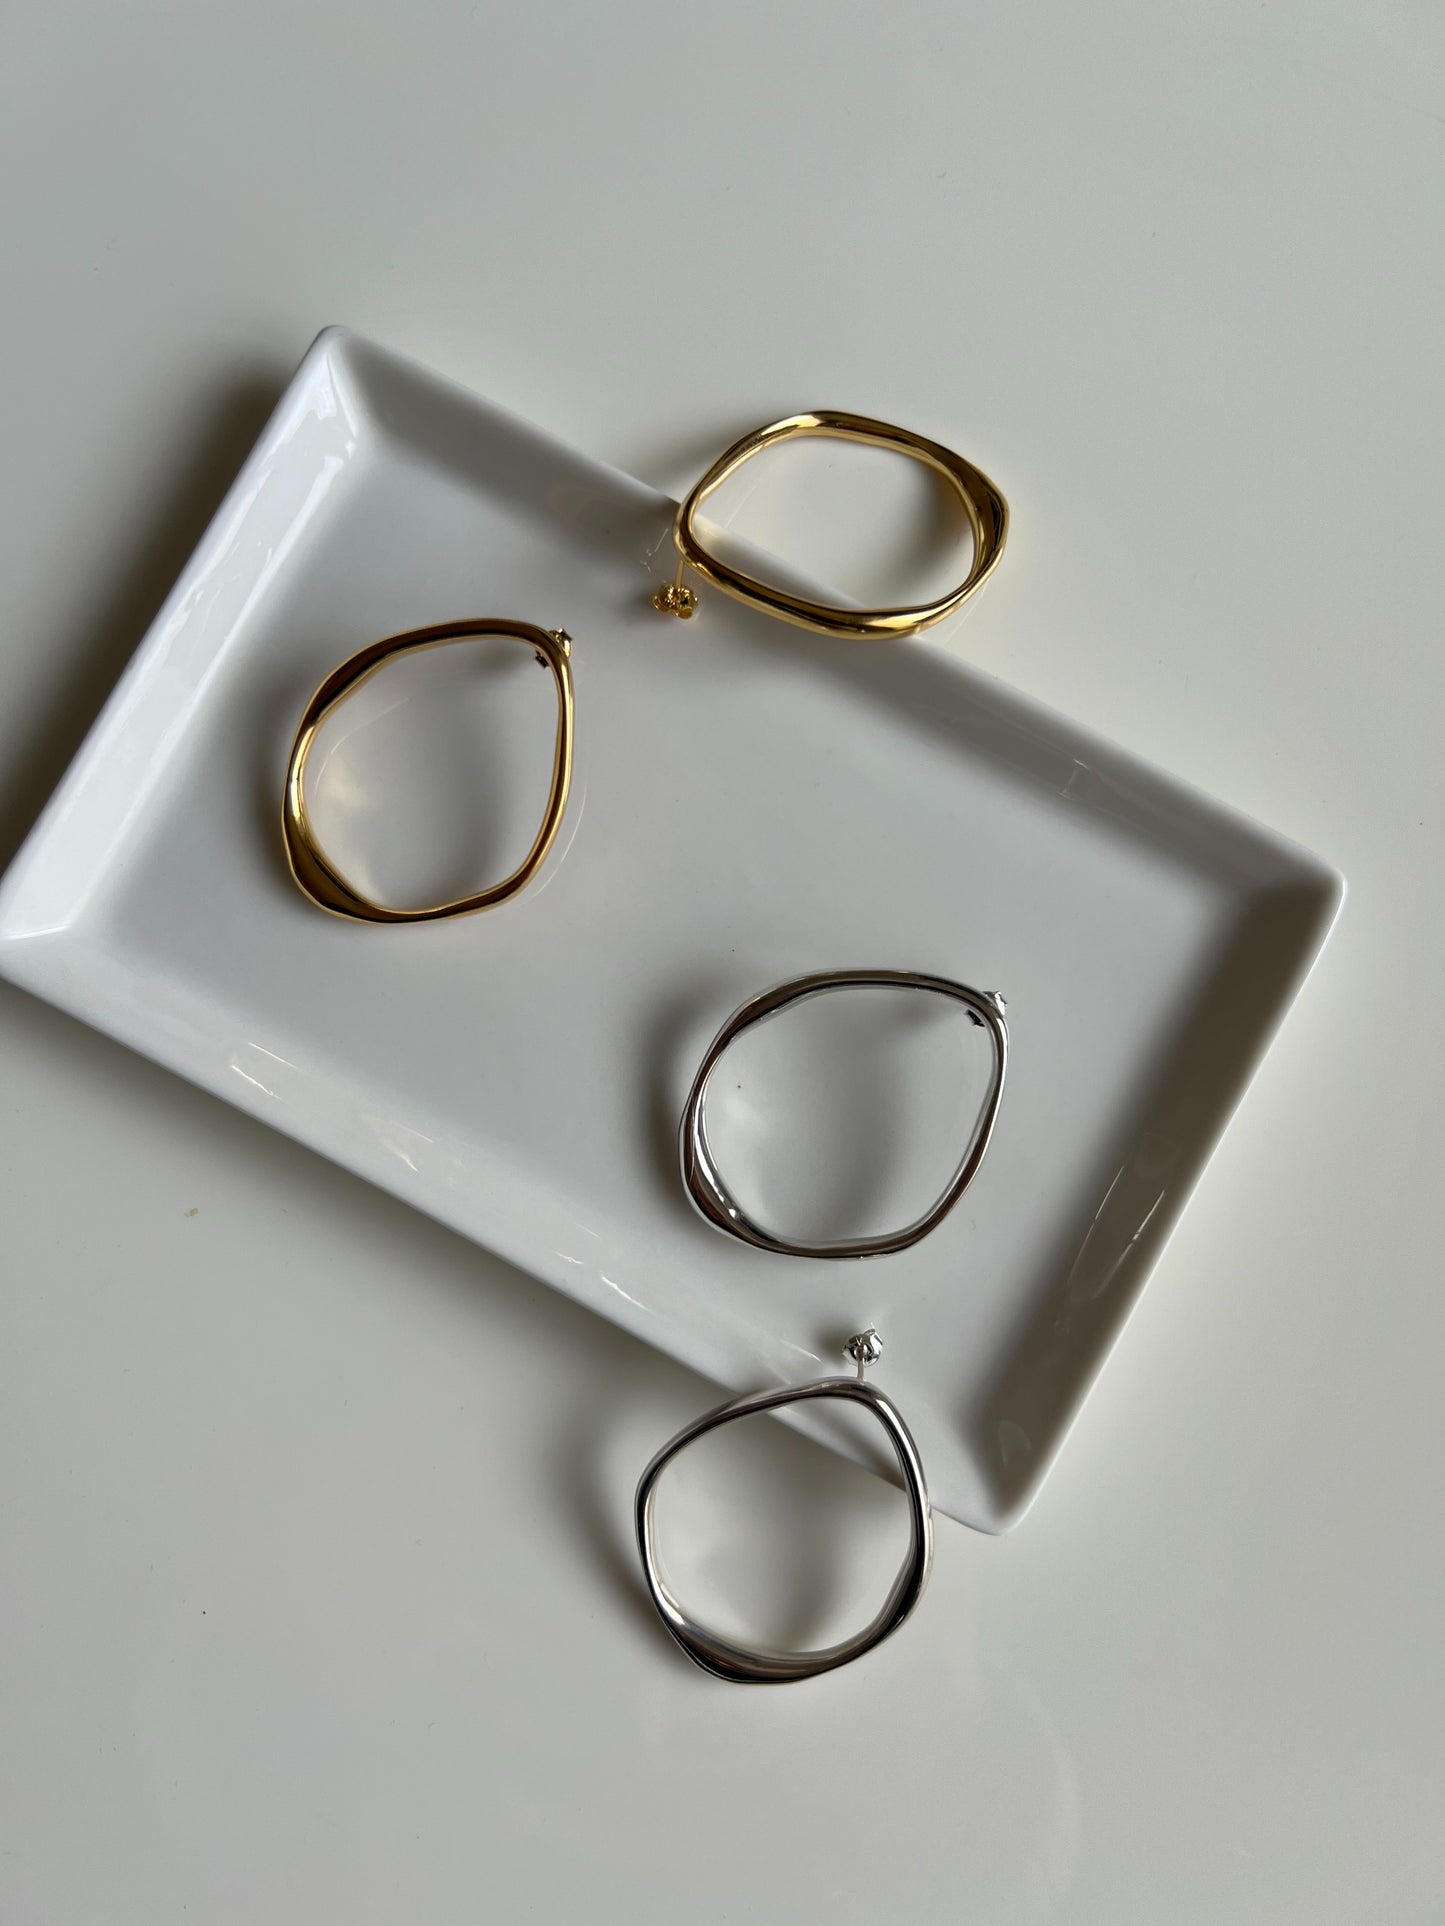 Oval handmade pierce